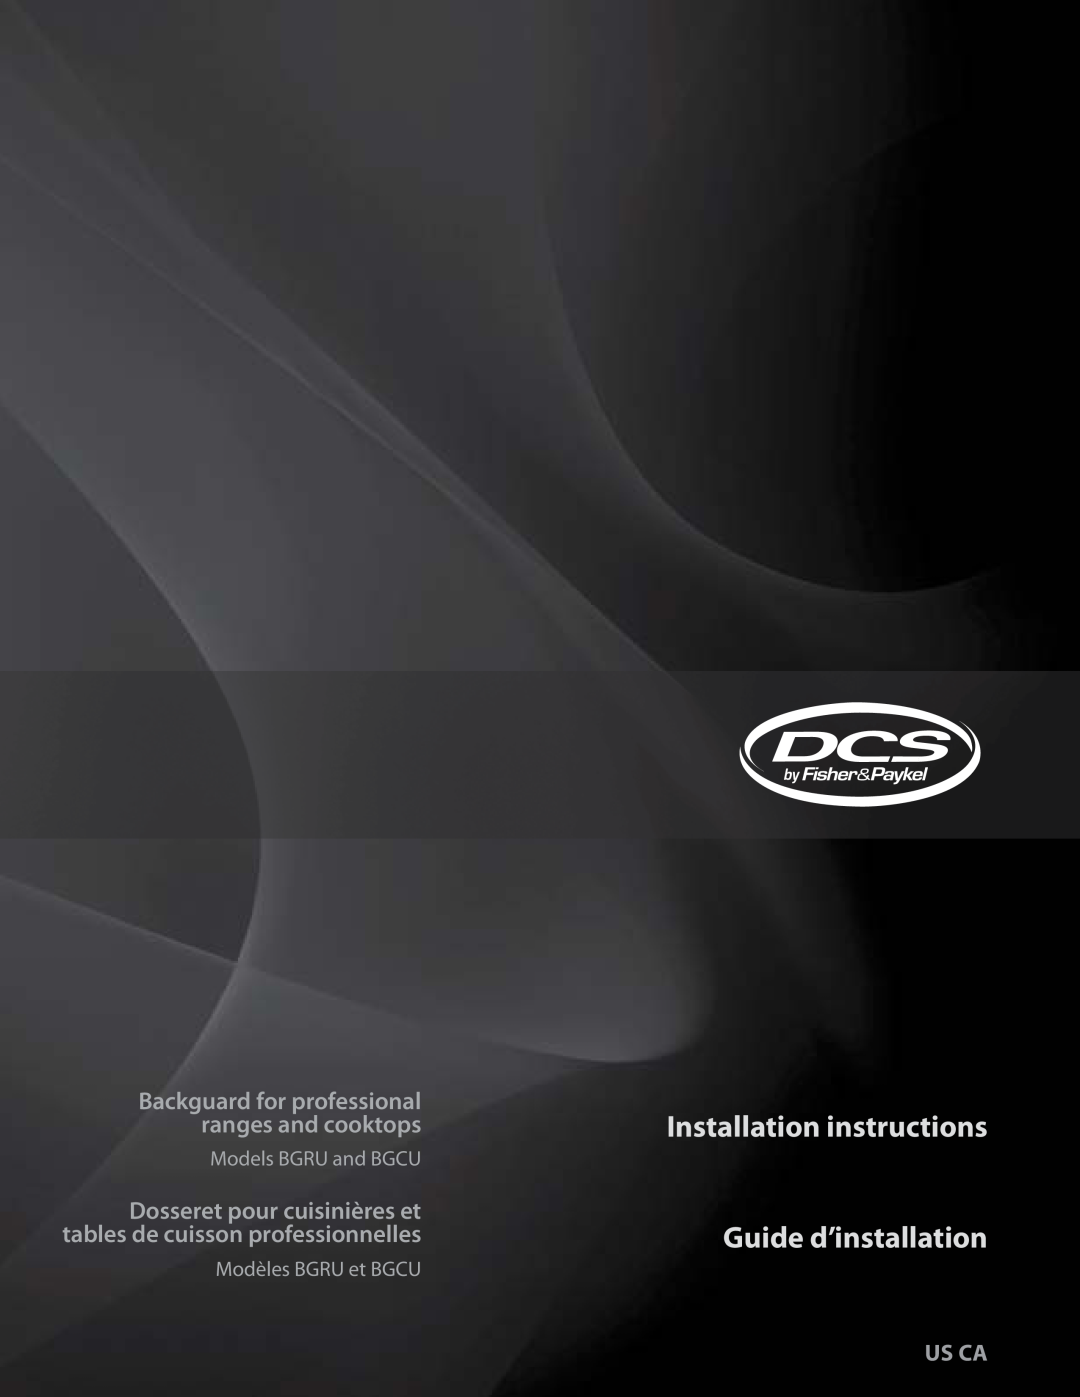 DCS installation instructions Installation instructions Guide d’installation, Us Ca, Models BGRU and BGCU 